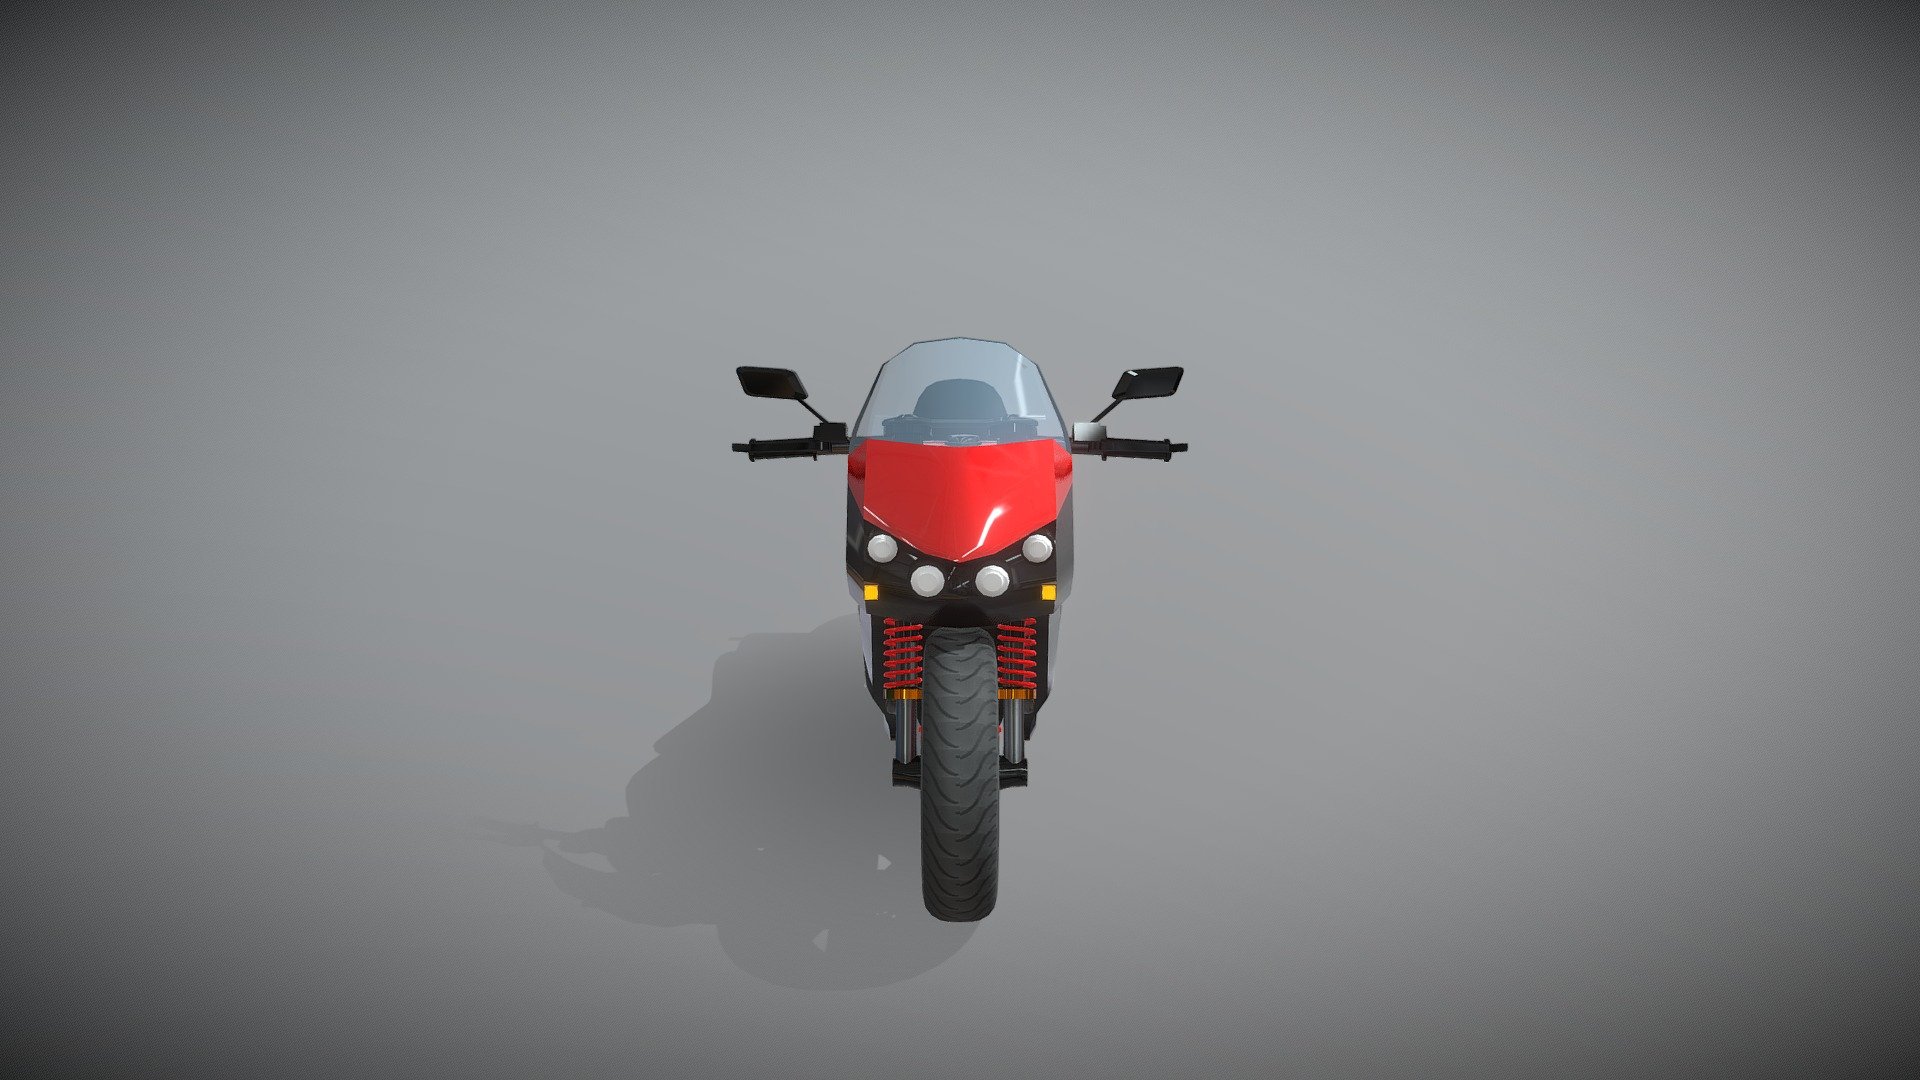 Motocicleta creada en blender para prueba con el entorno EON-XR - Moto Virtual AV5 - Download Free 3D model by Melchor_Graphs96 3d model